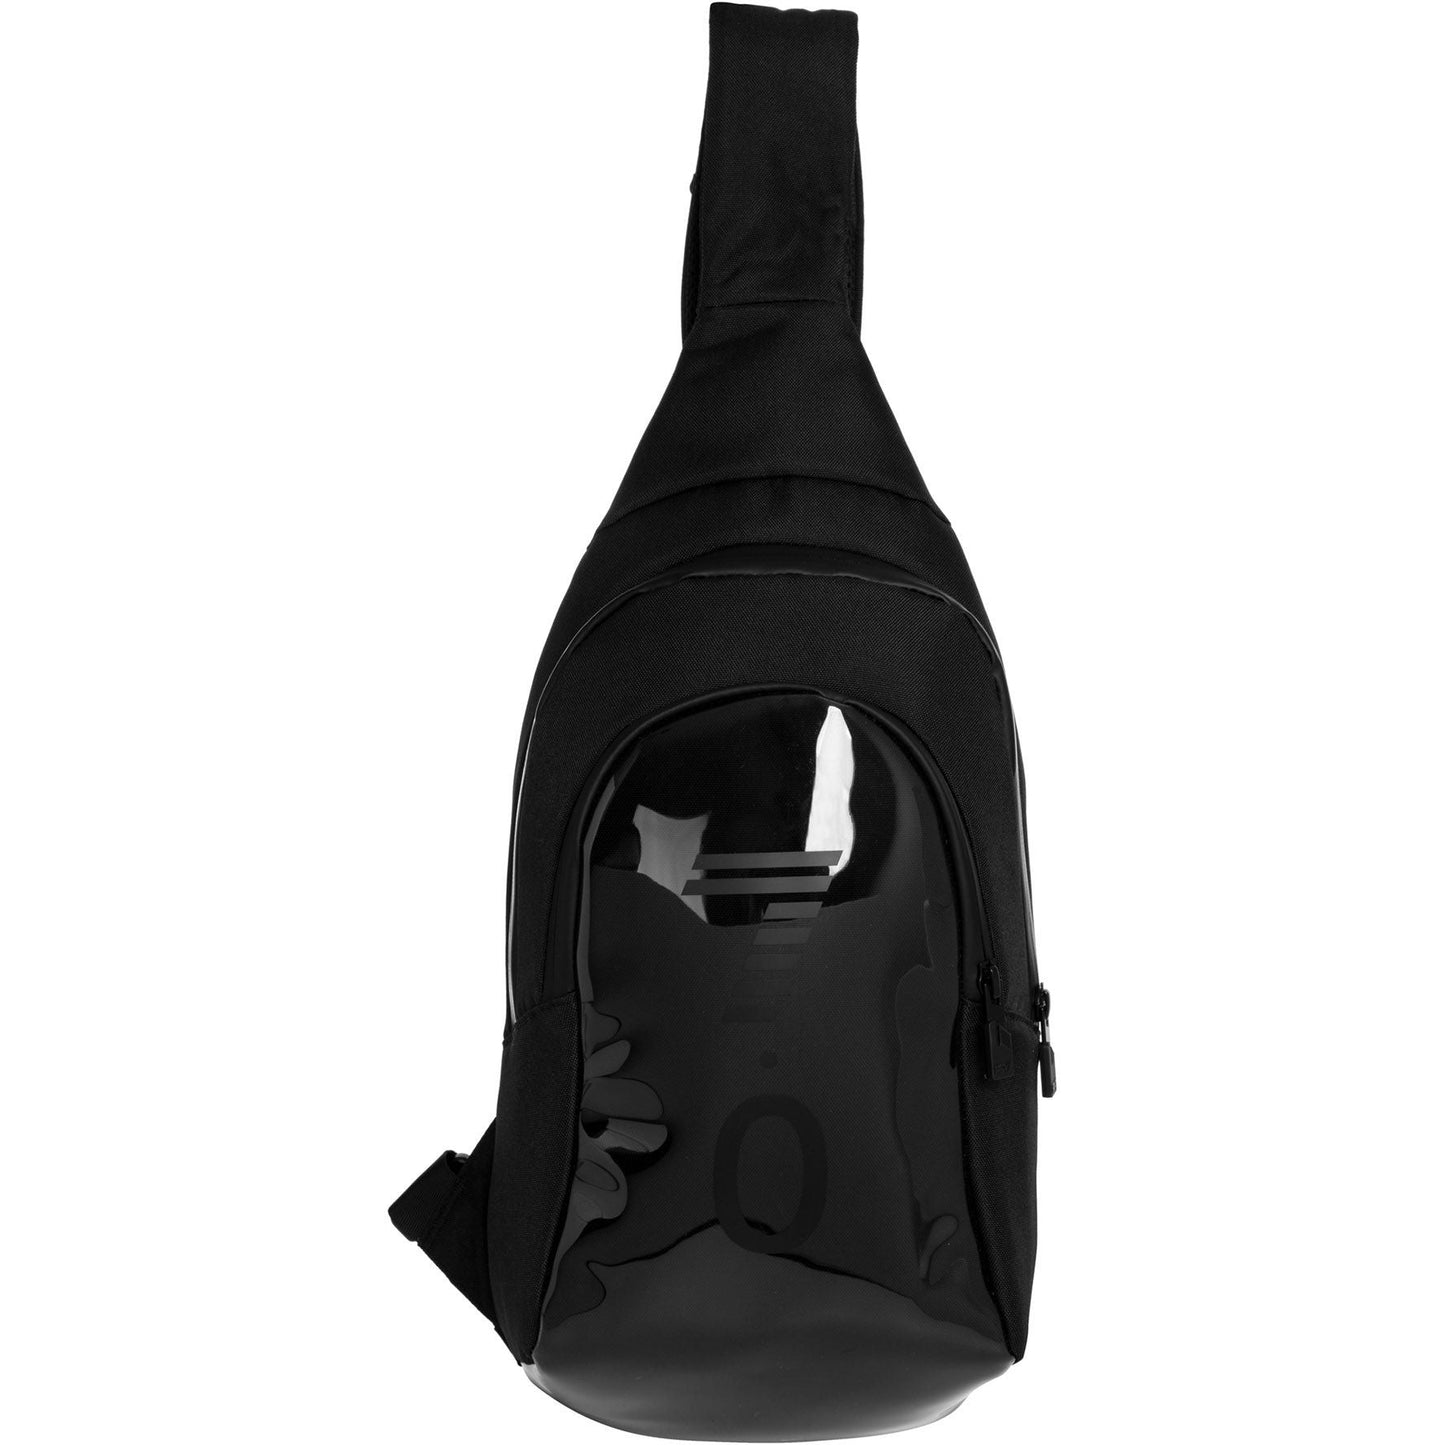 EA7 vyriška juoda kuprinė Backpack